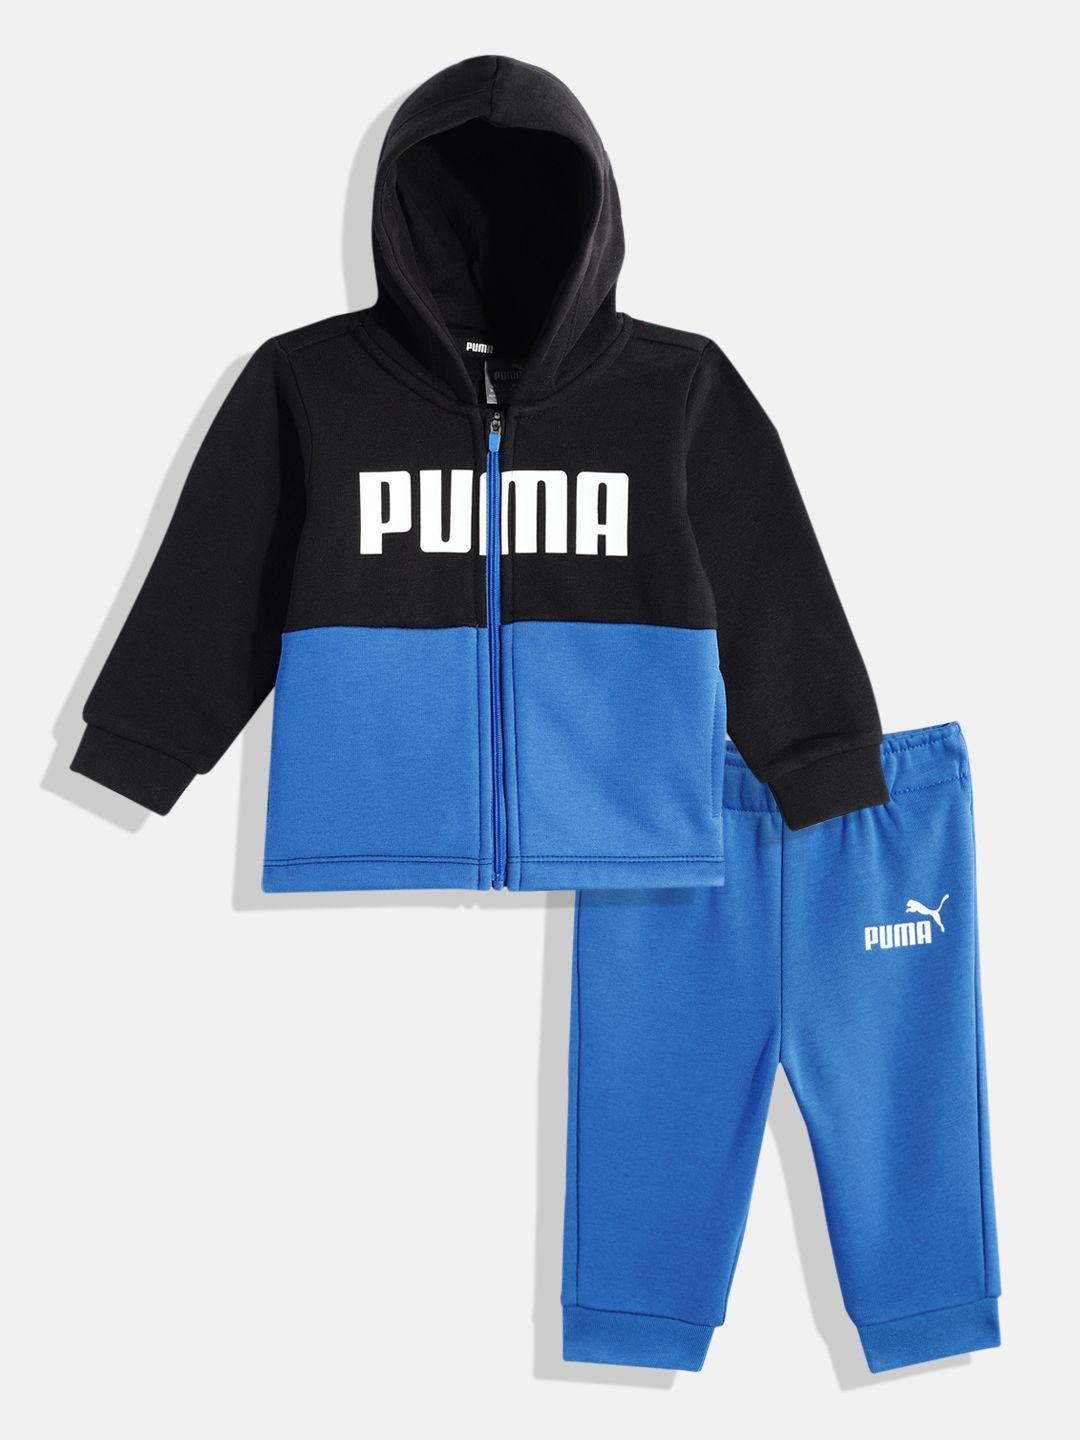 puma kids brand logo printed sweatshirt with joggers